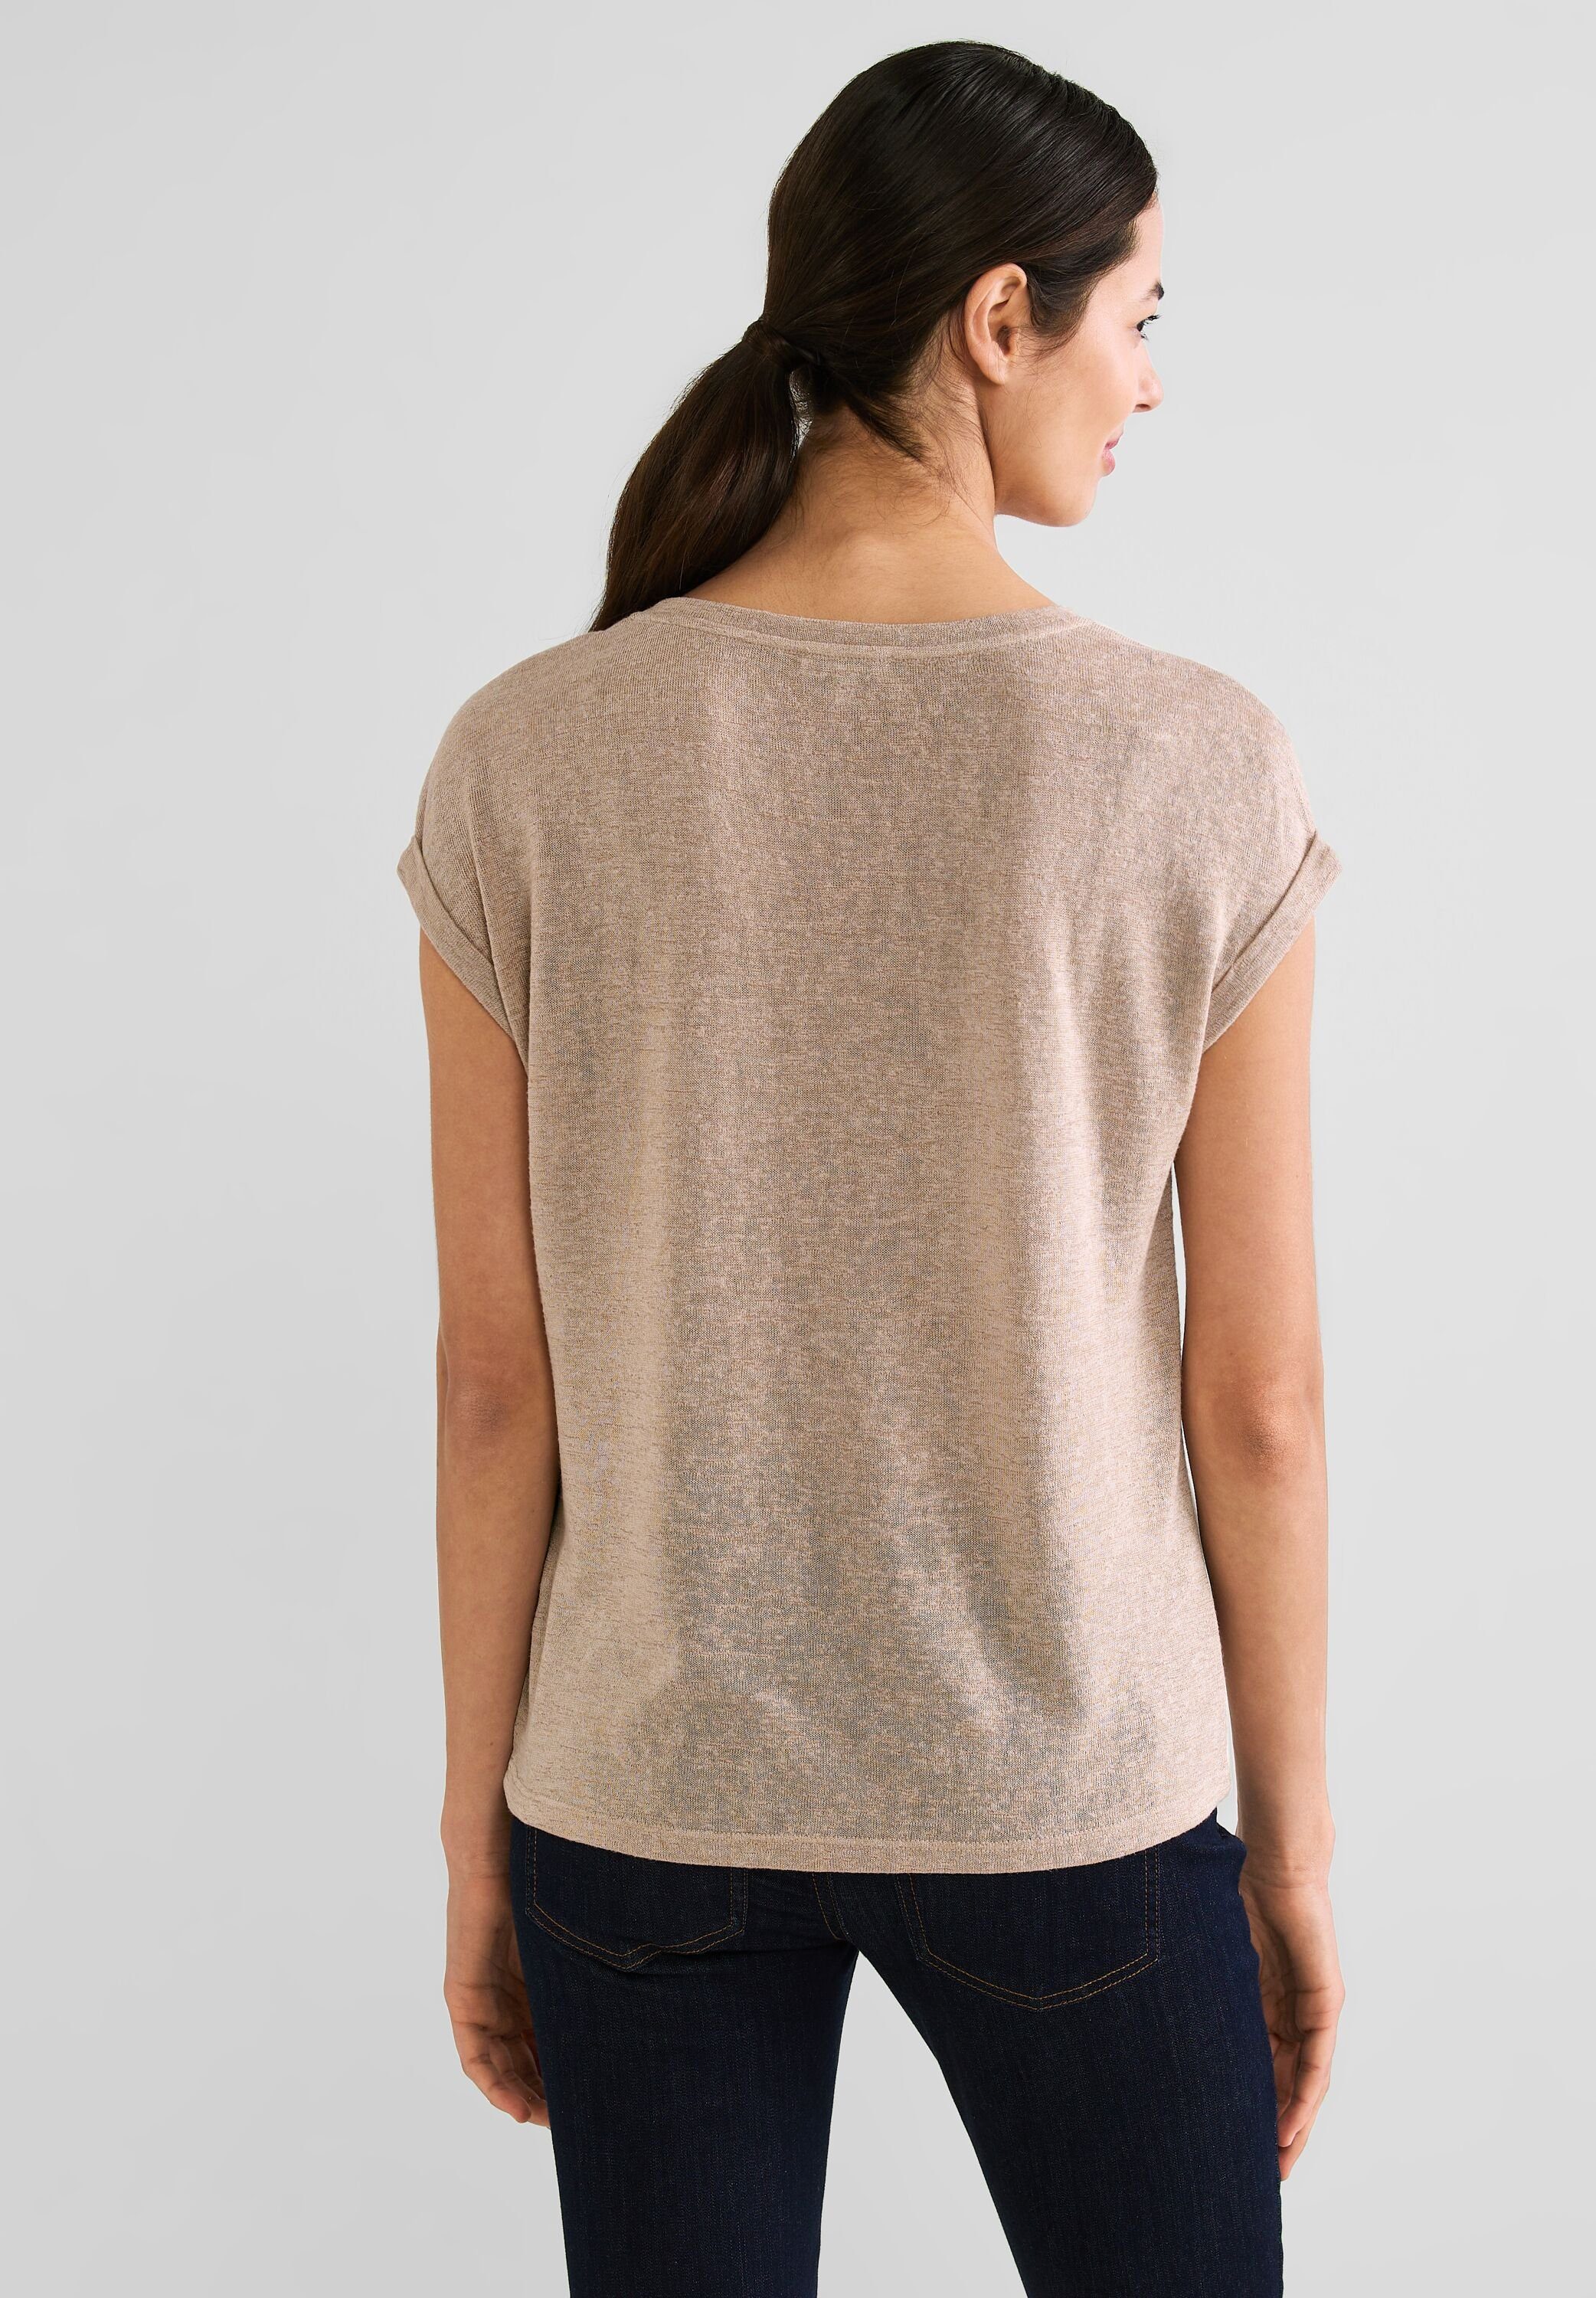 Leinen-Optik sand ONE T-Shirt STREET soft in